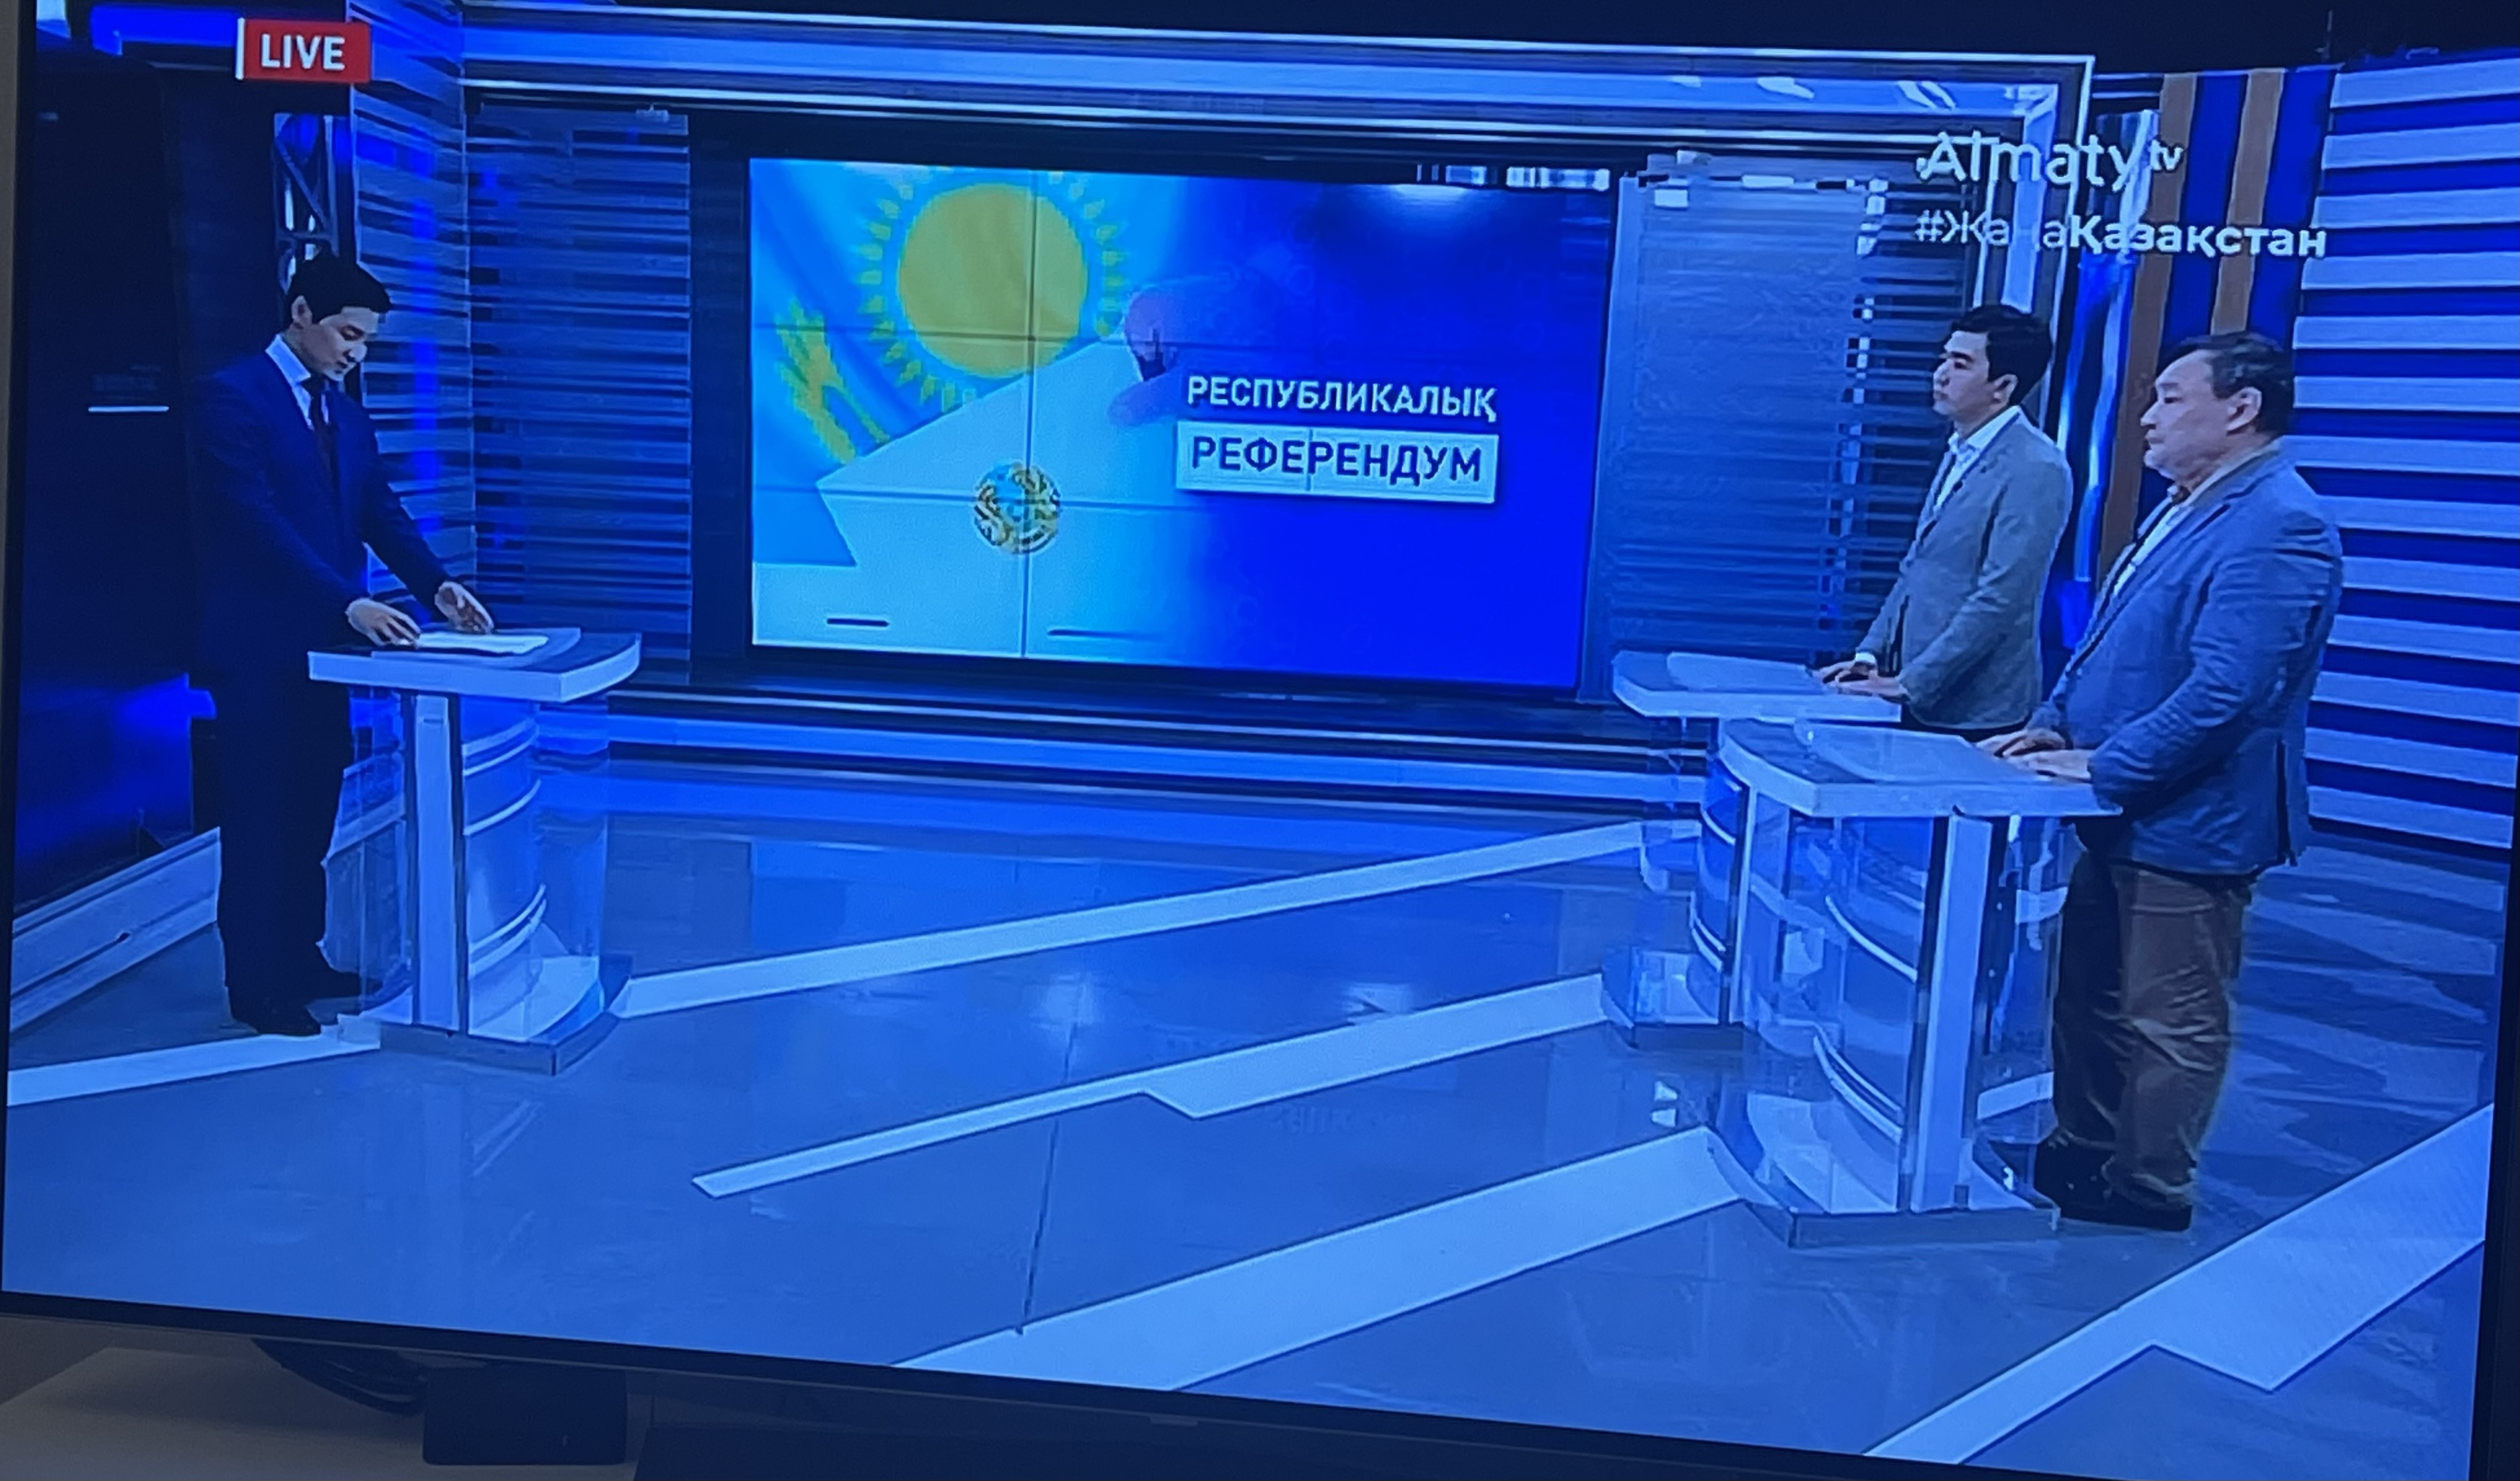 о передаче "Басты назарда" телеканала Almaty